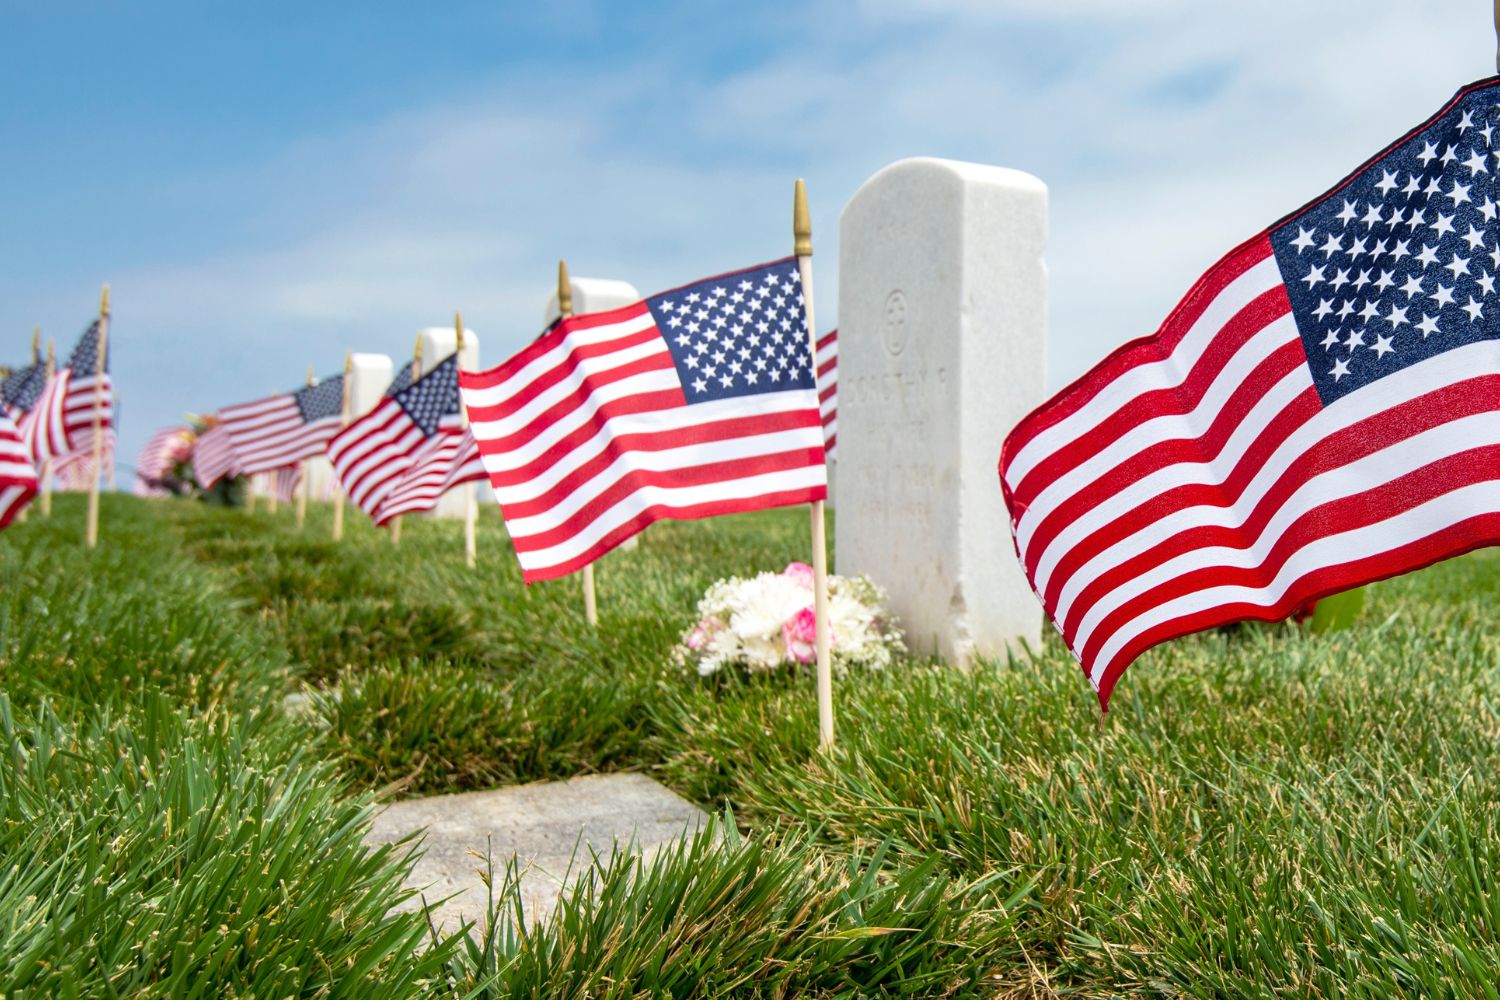 Flags mark graves for Memorial Day